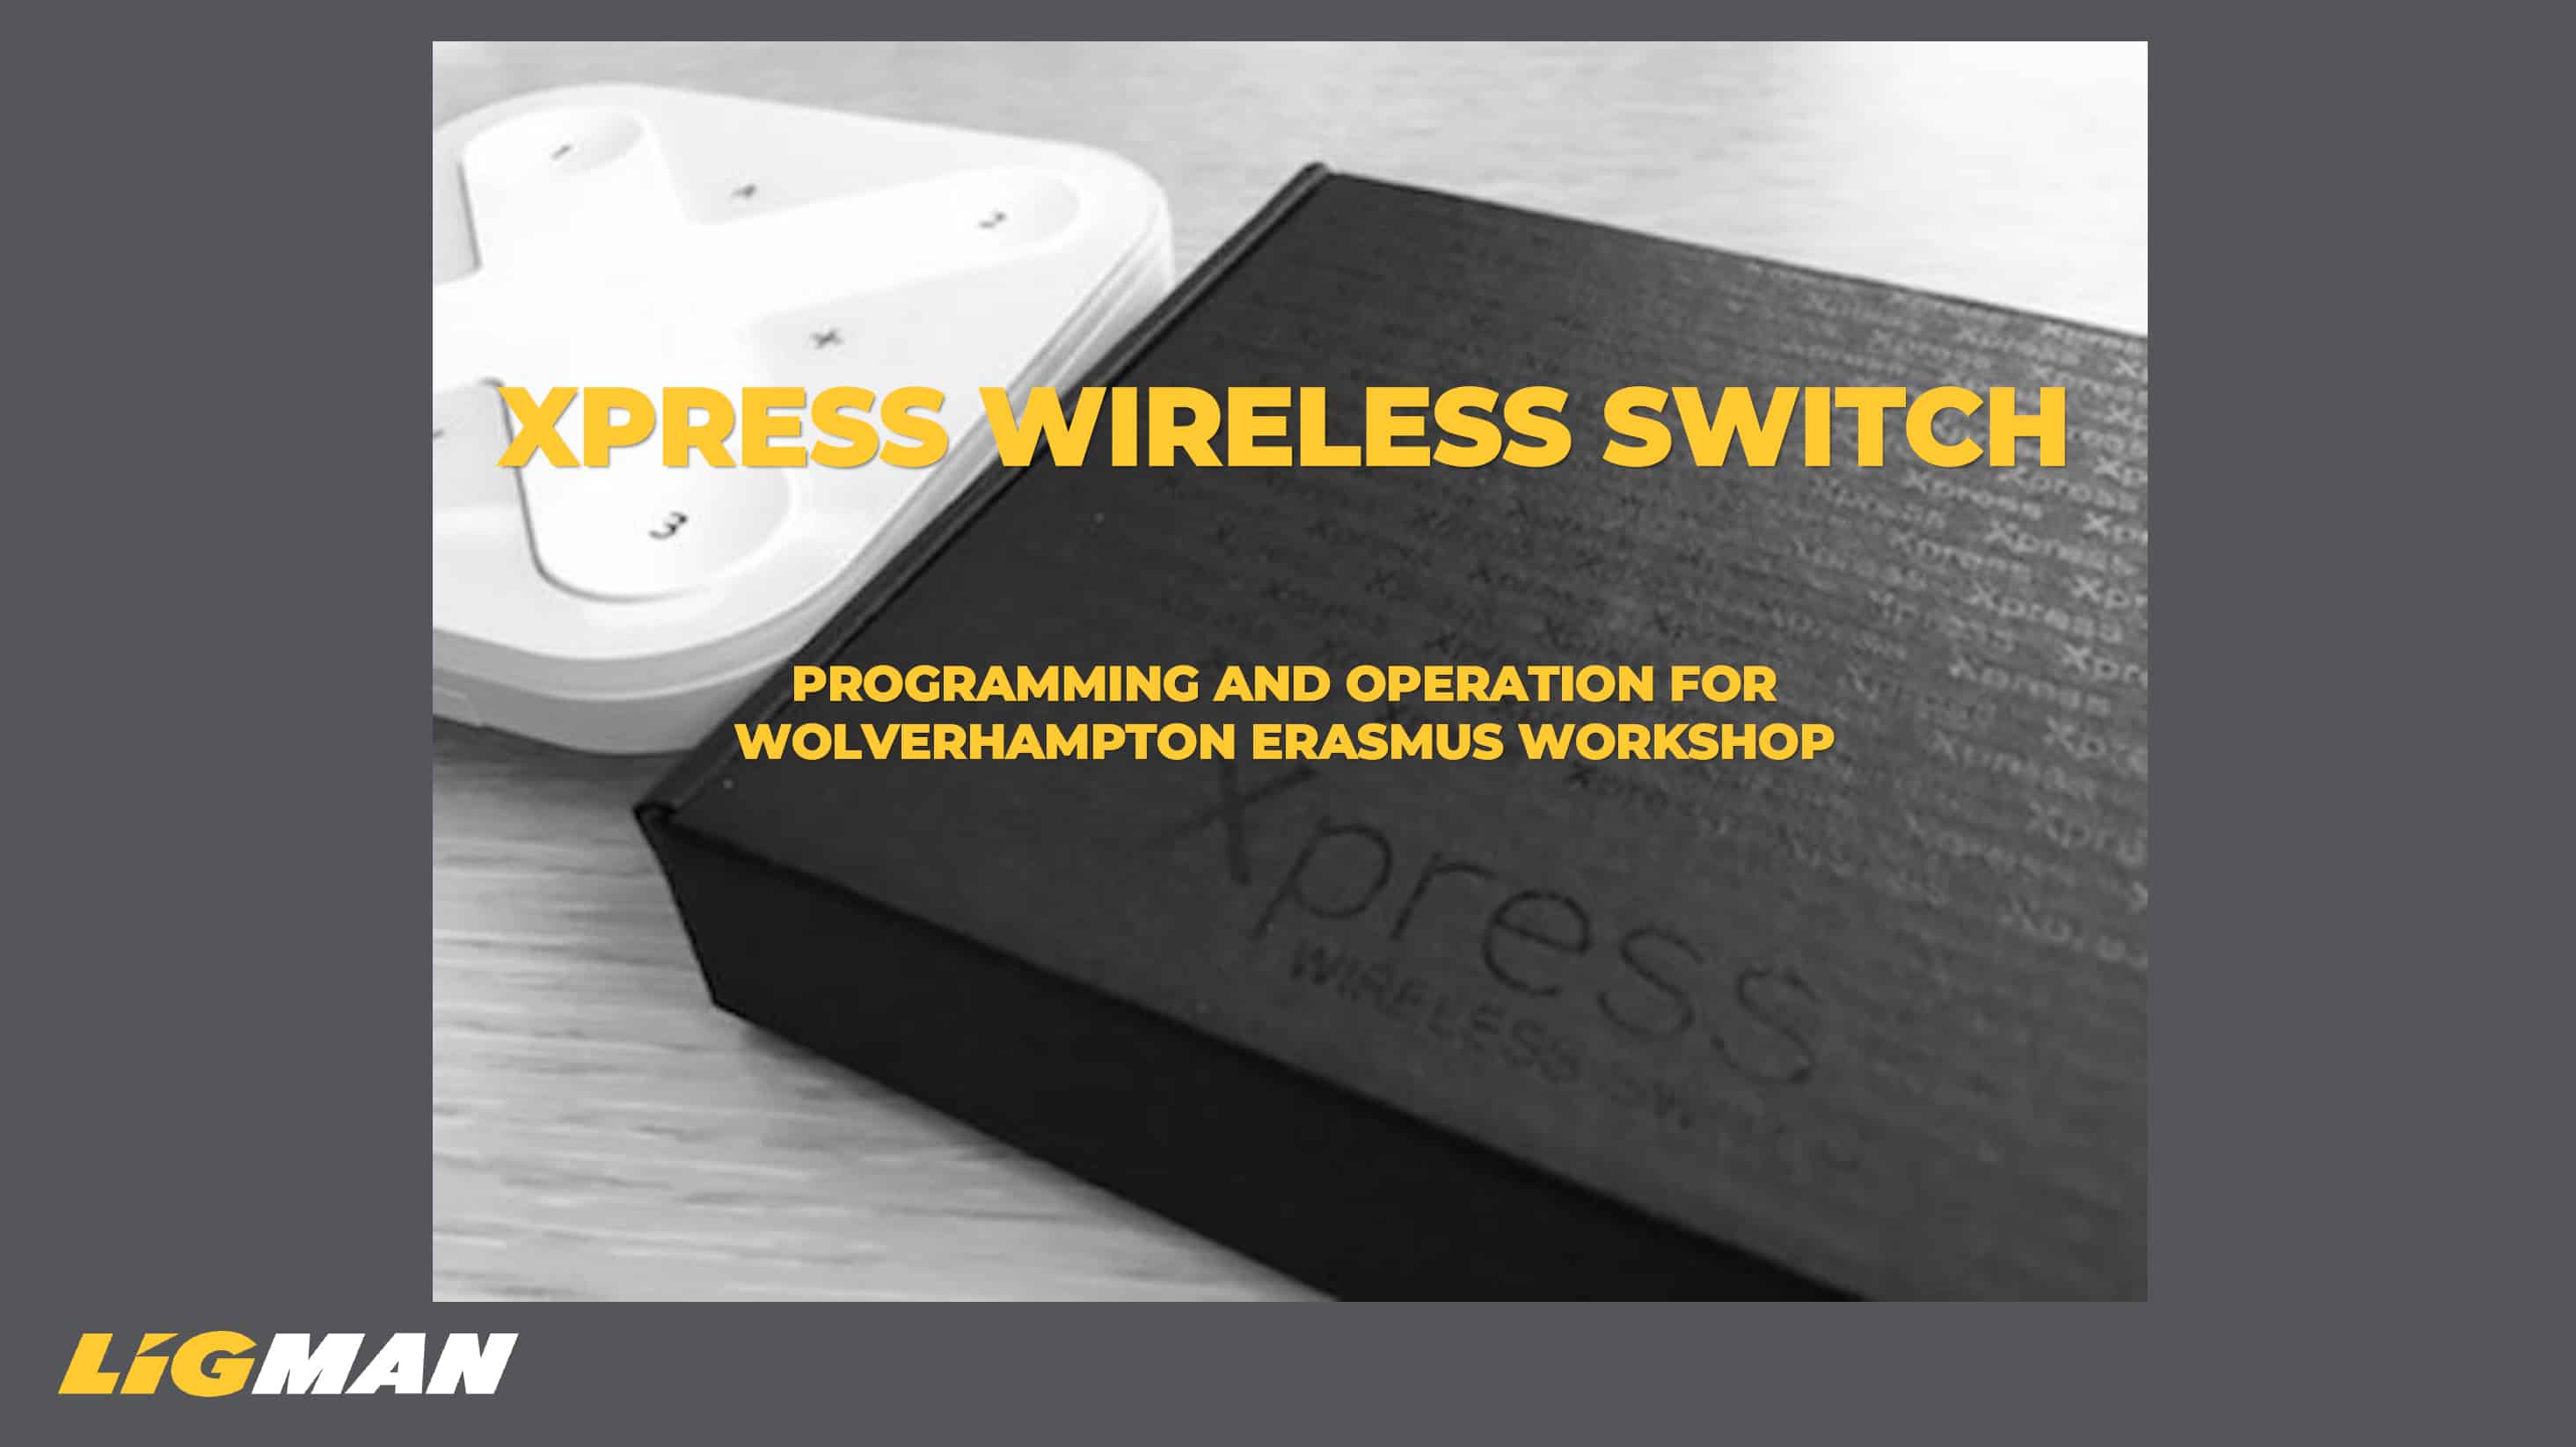 Accessories: Press Wireless Switch